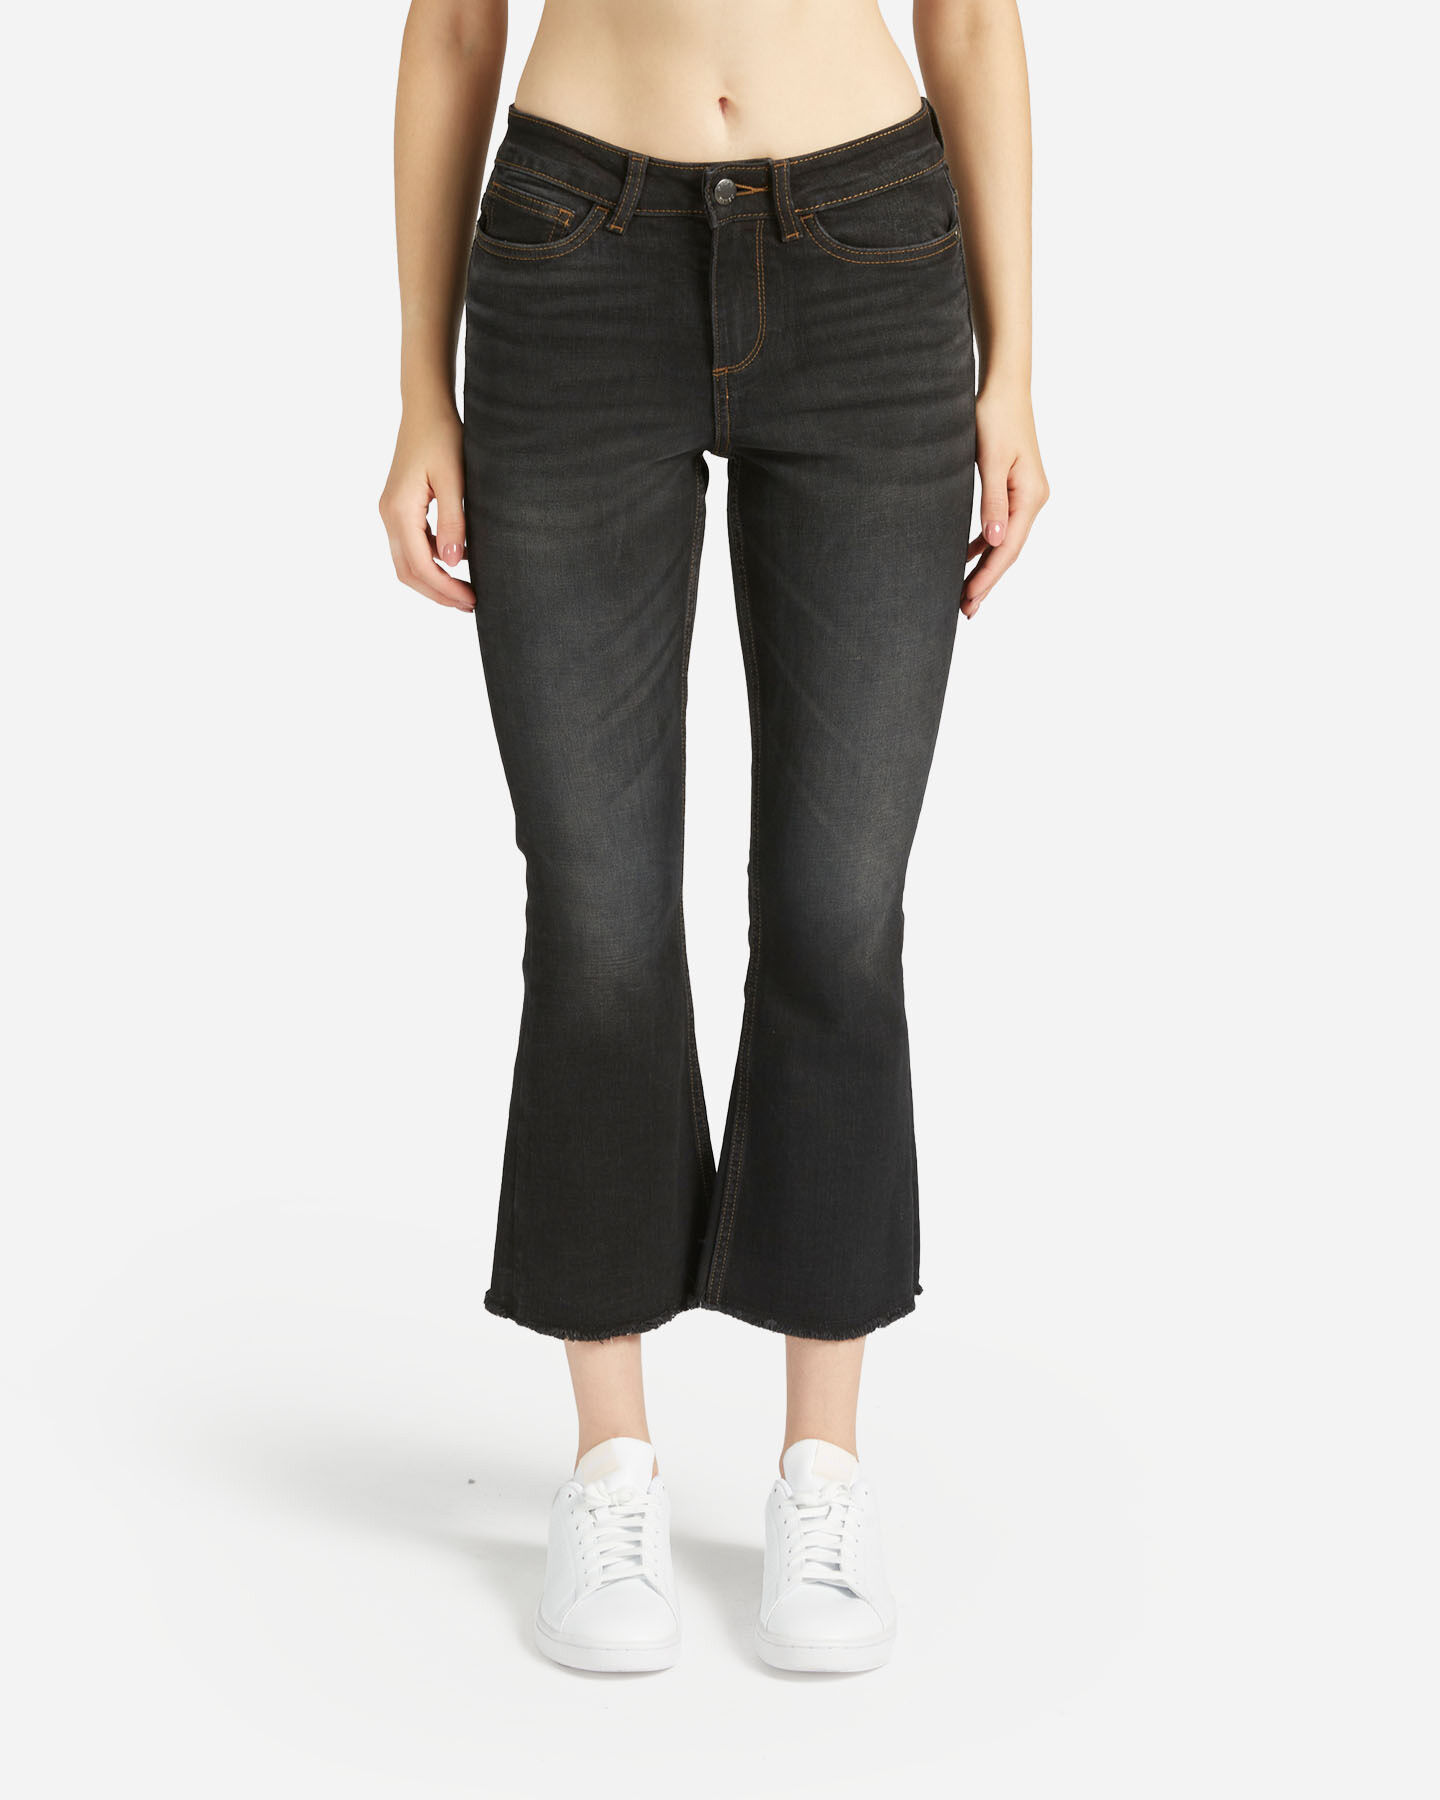  Jeans DACK'S DENIM PROJECT W S4124818|DD|40 scatto 0